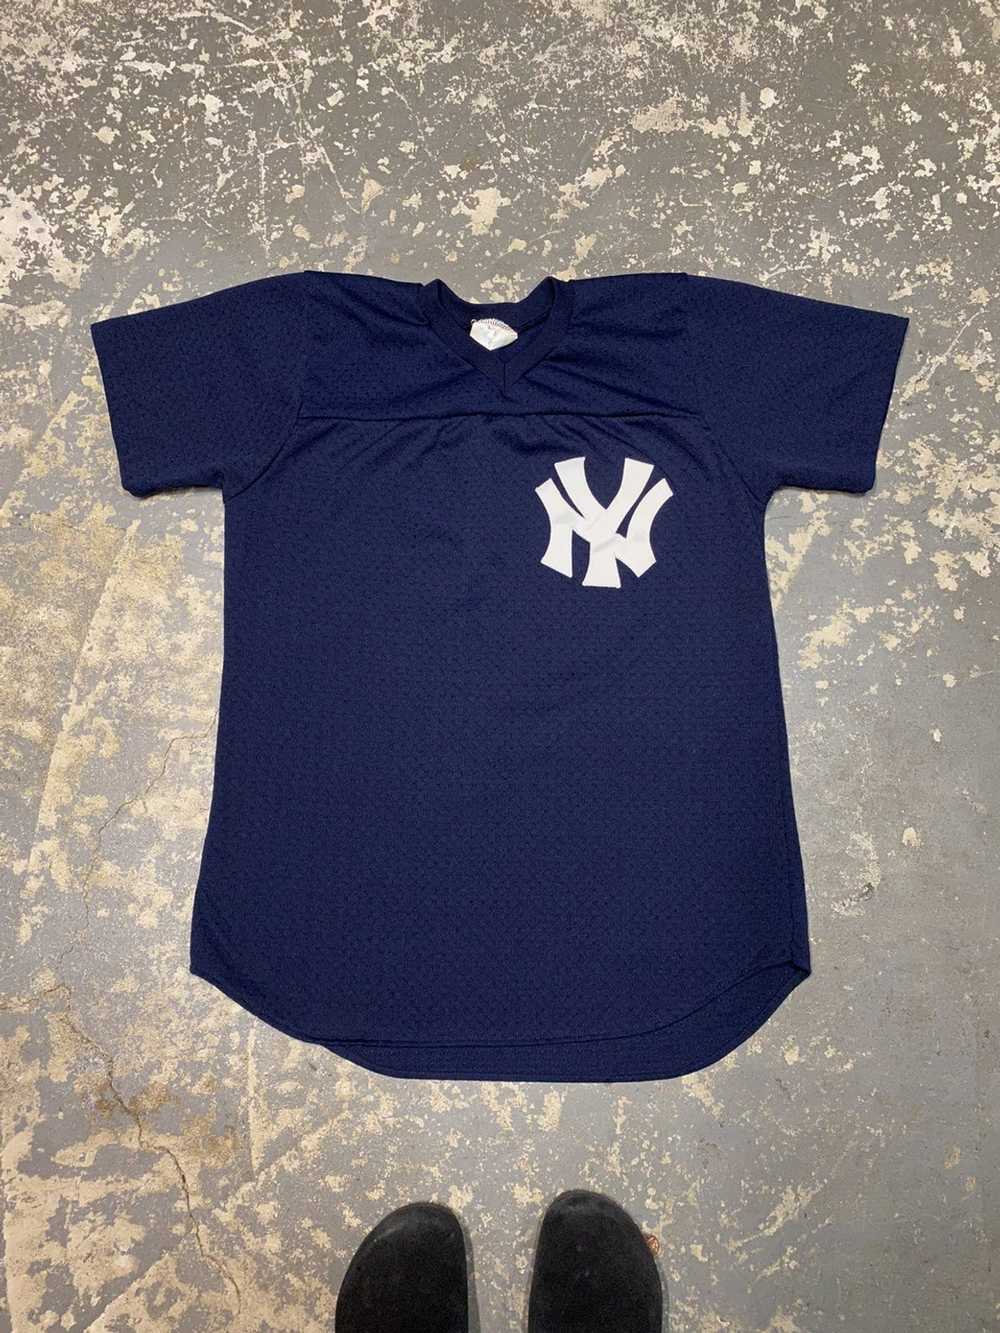 Vintage New York Yankees Reyn Spooner Button Shirt Size 2X-Large